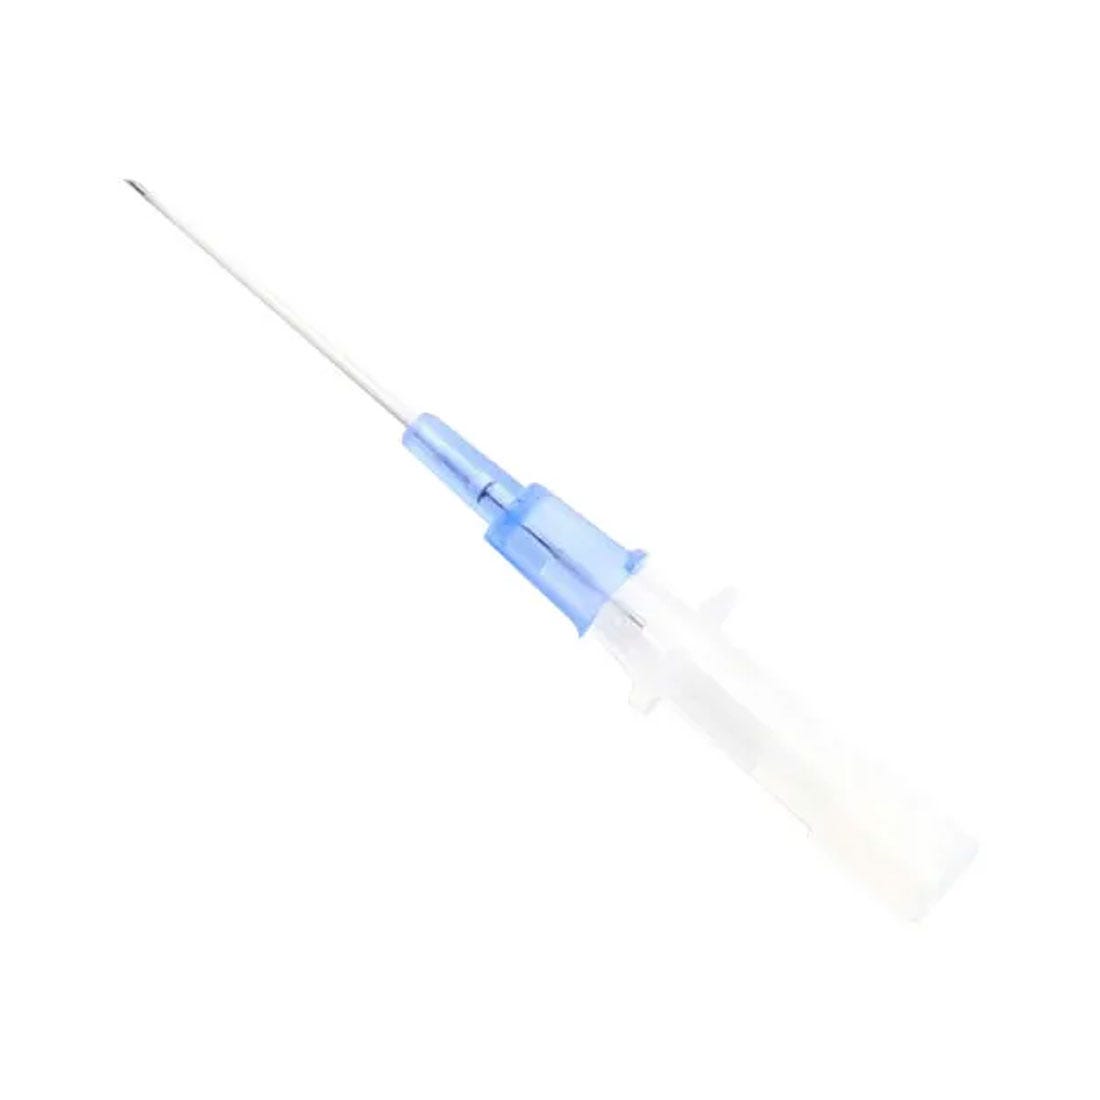 Jelco® IV Catheter, 22G x 1", Straight, with Blue Hub - 50/Box